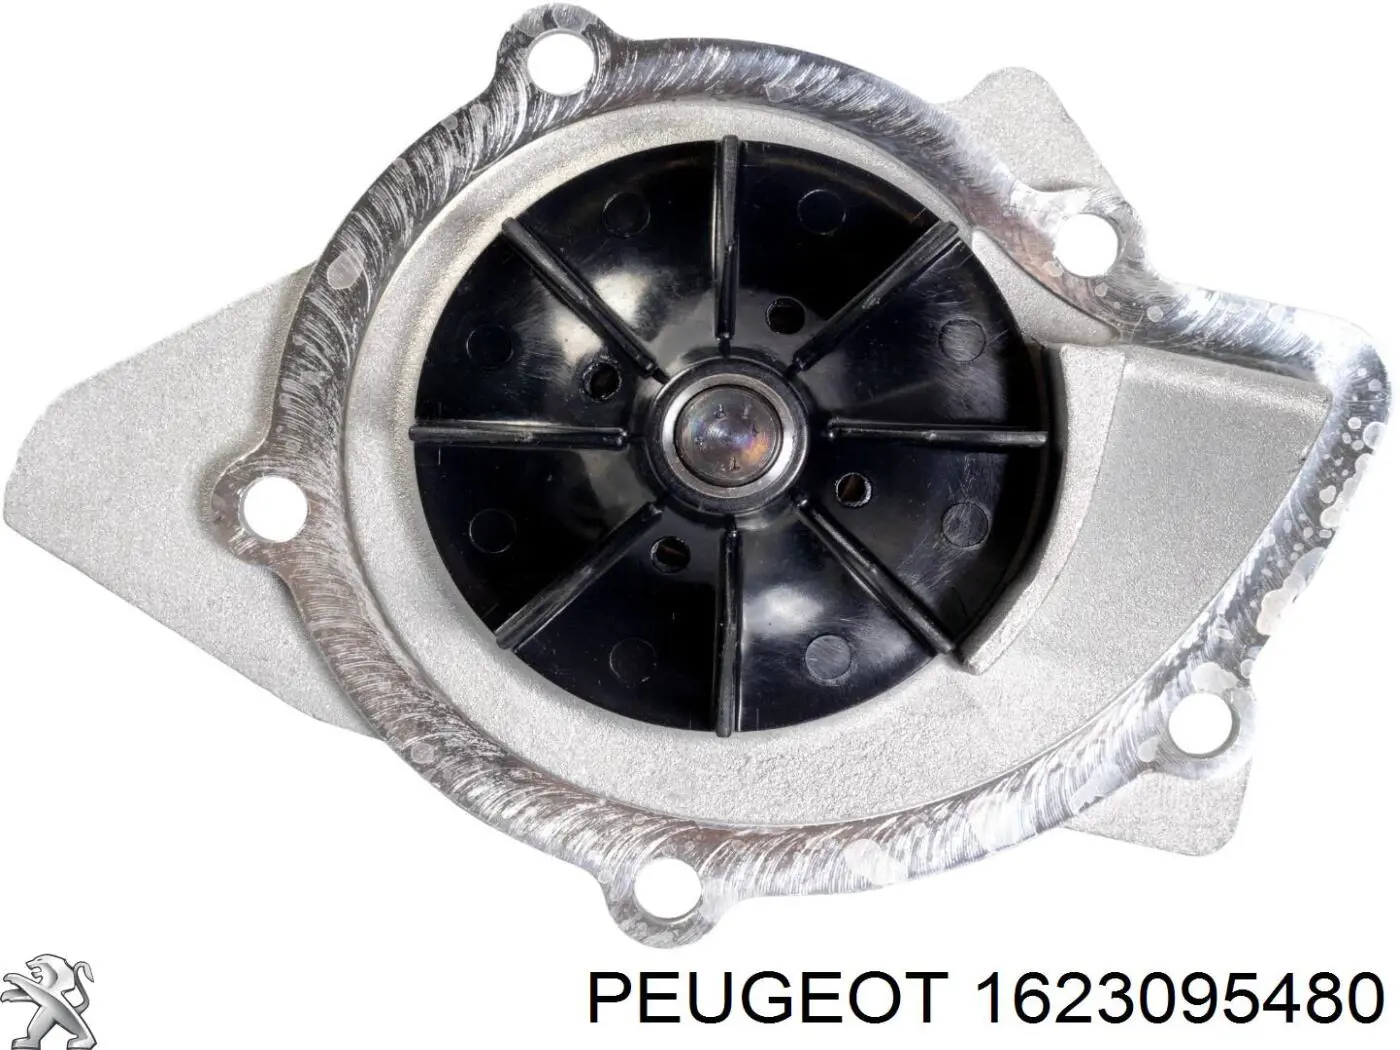 Bomba de agua 1623095480 Peugeot/Citroen